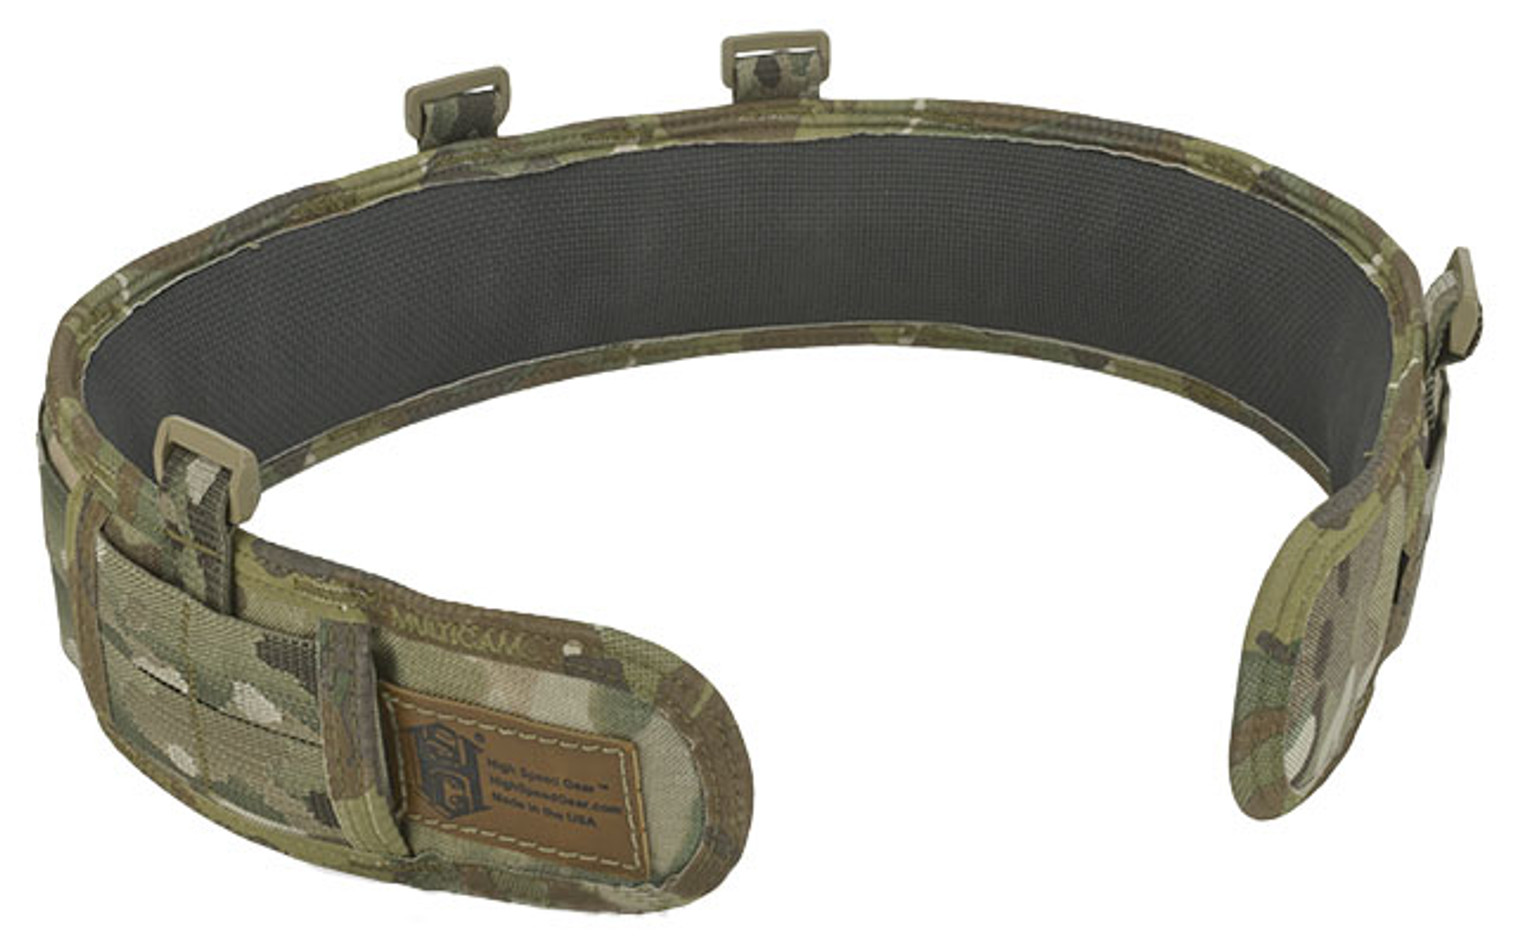 HSGI Slotted Slim-Grip Padded Duty Belt - Multicam